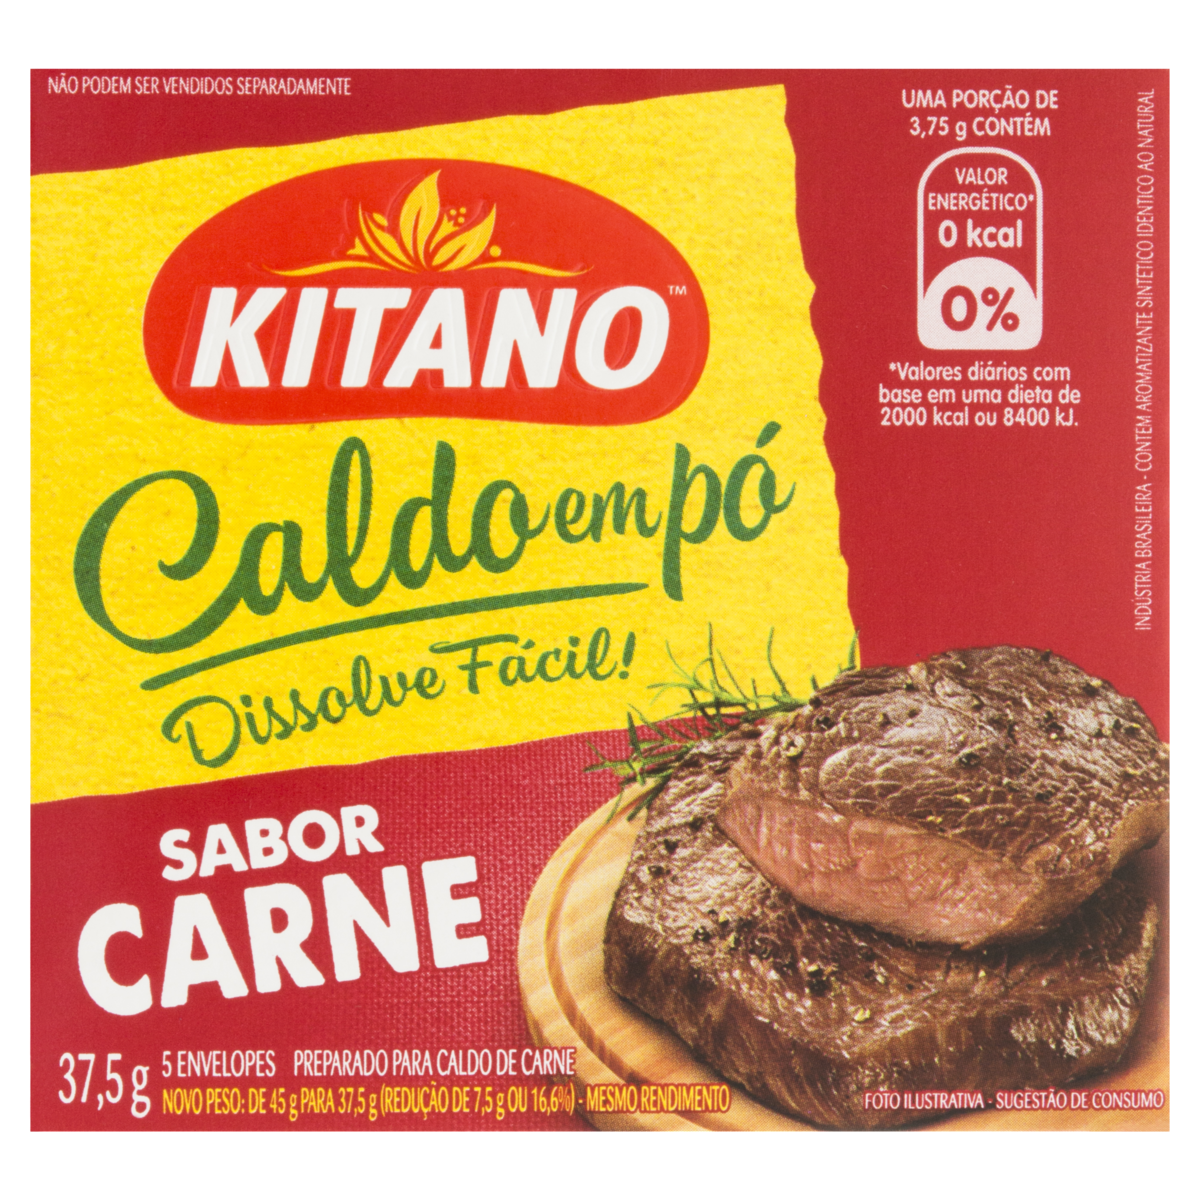 7891095158010 - CALDO DE CARNE KITANO RS